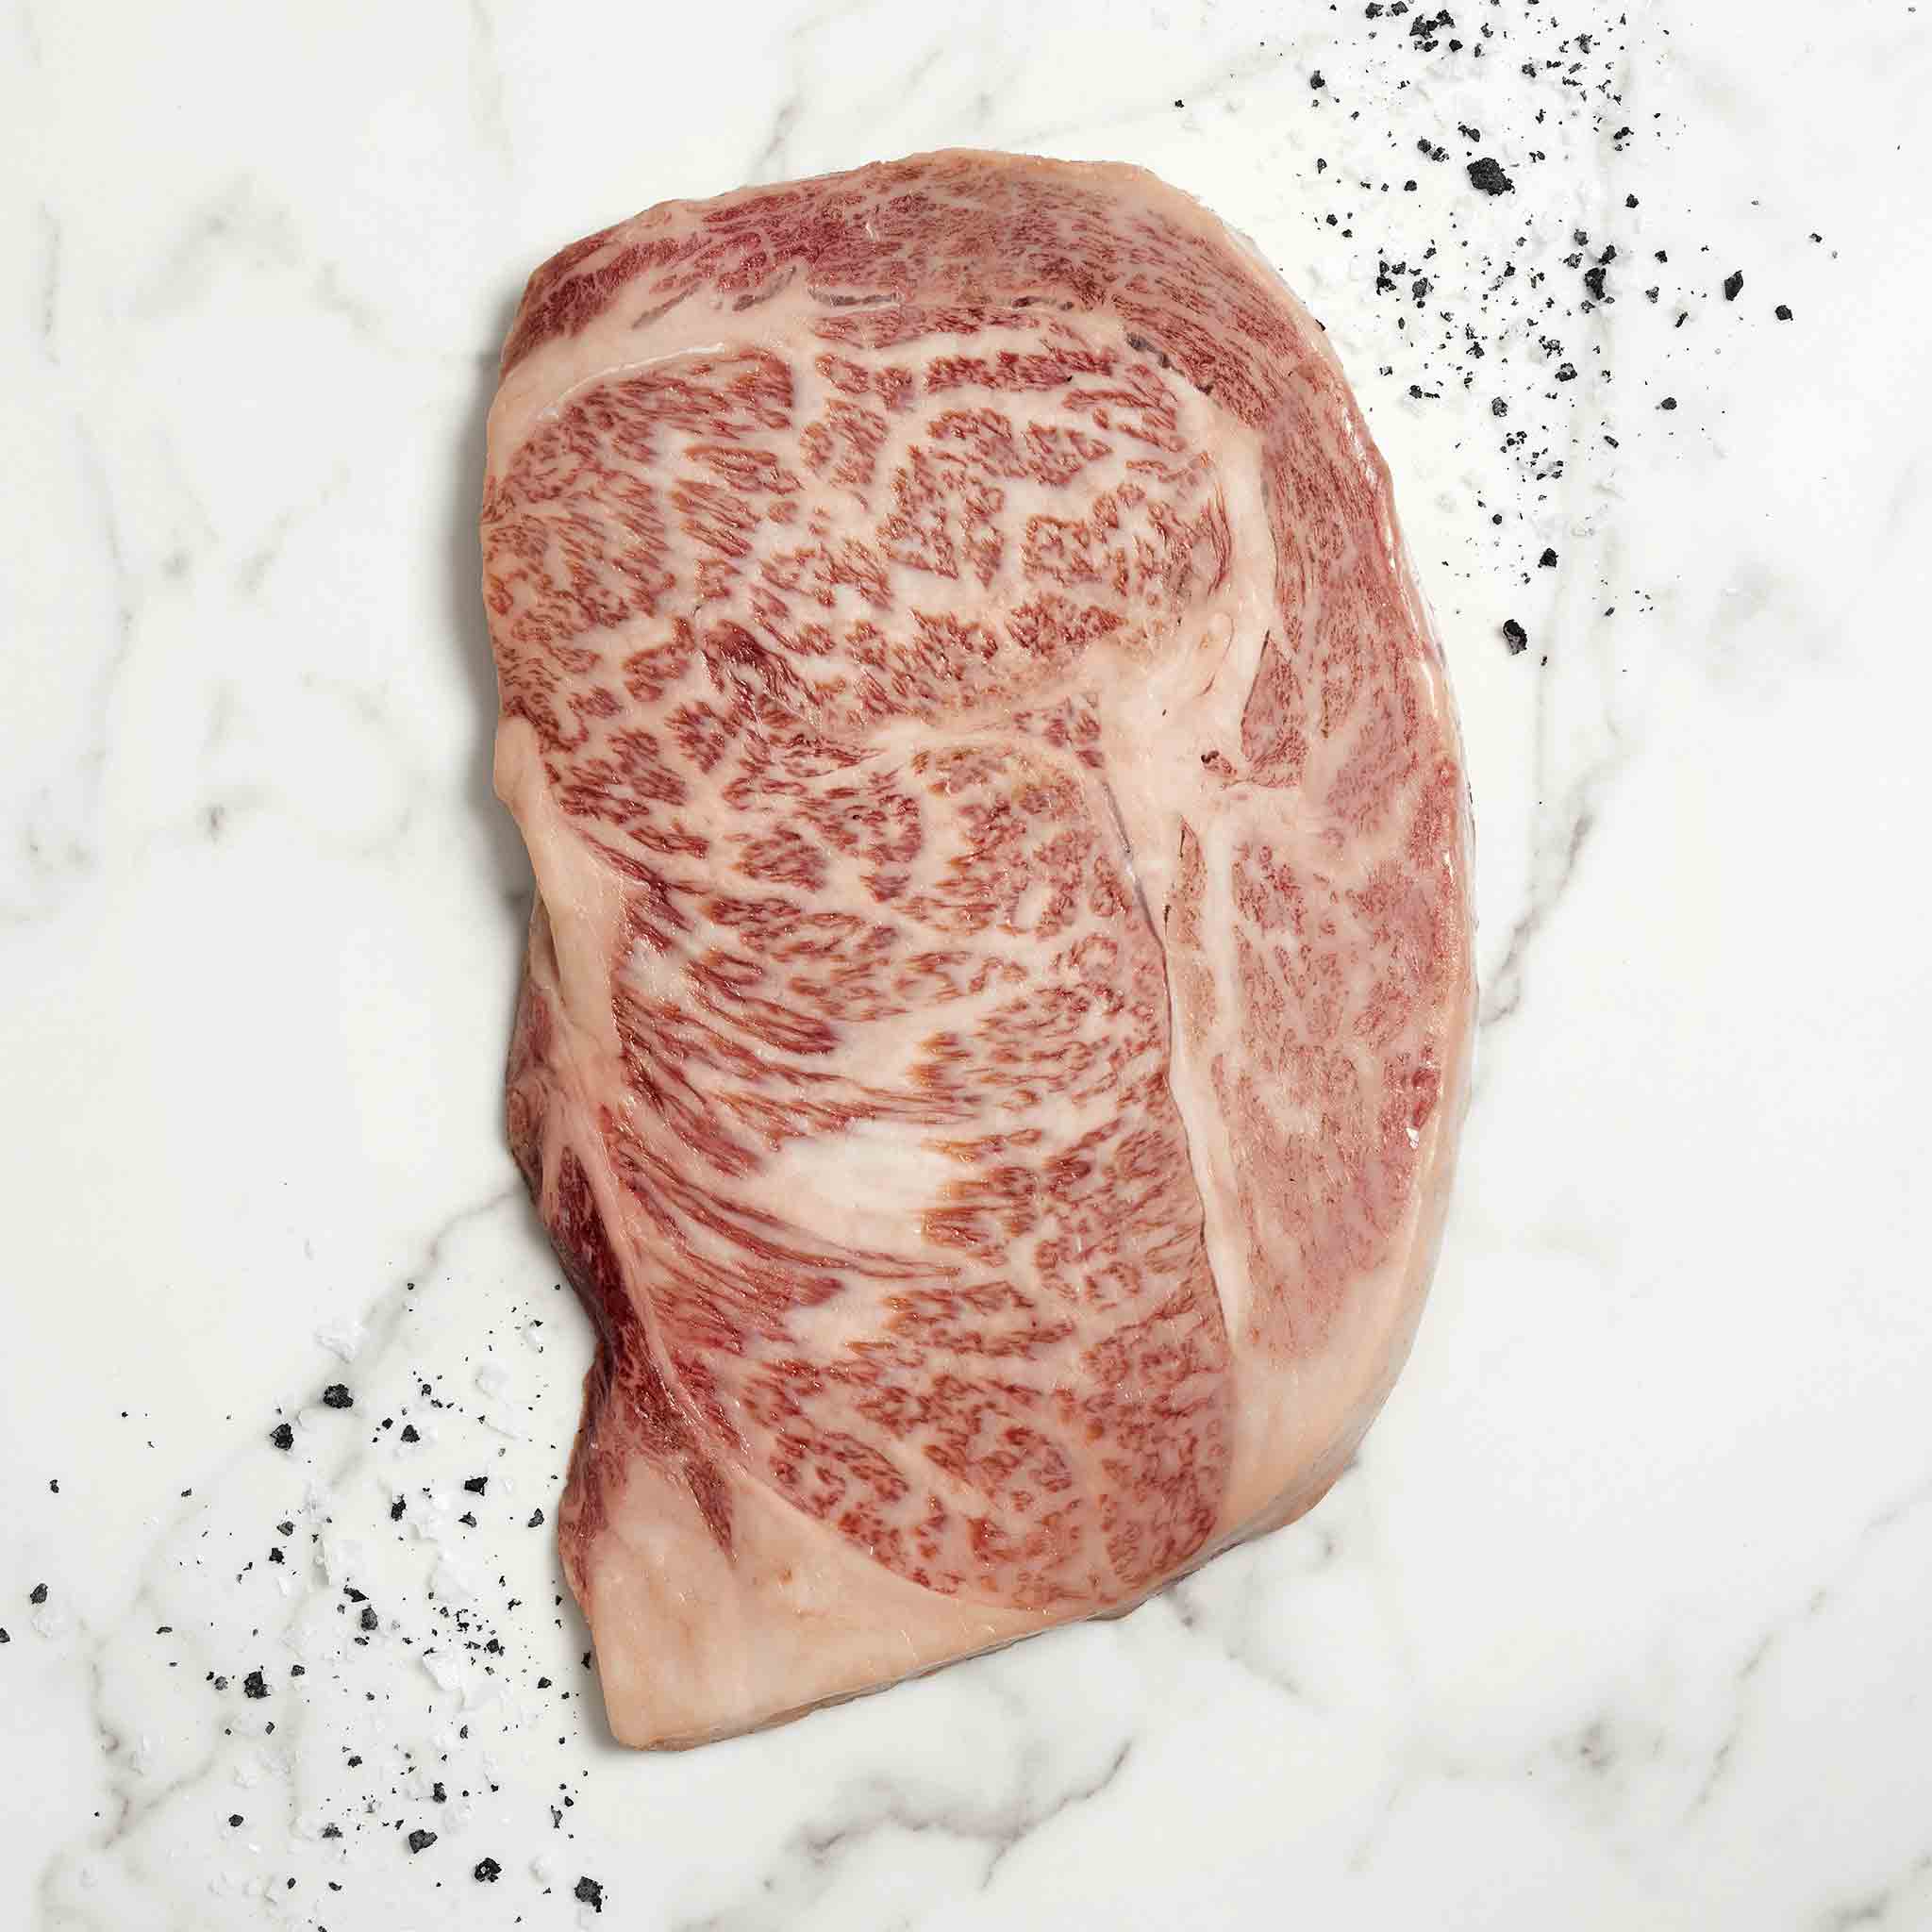 Japanese Kobe Beef Ribeye Steak